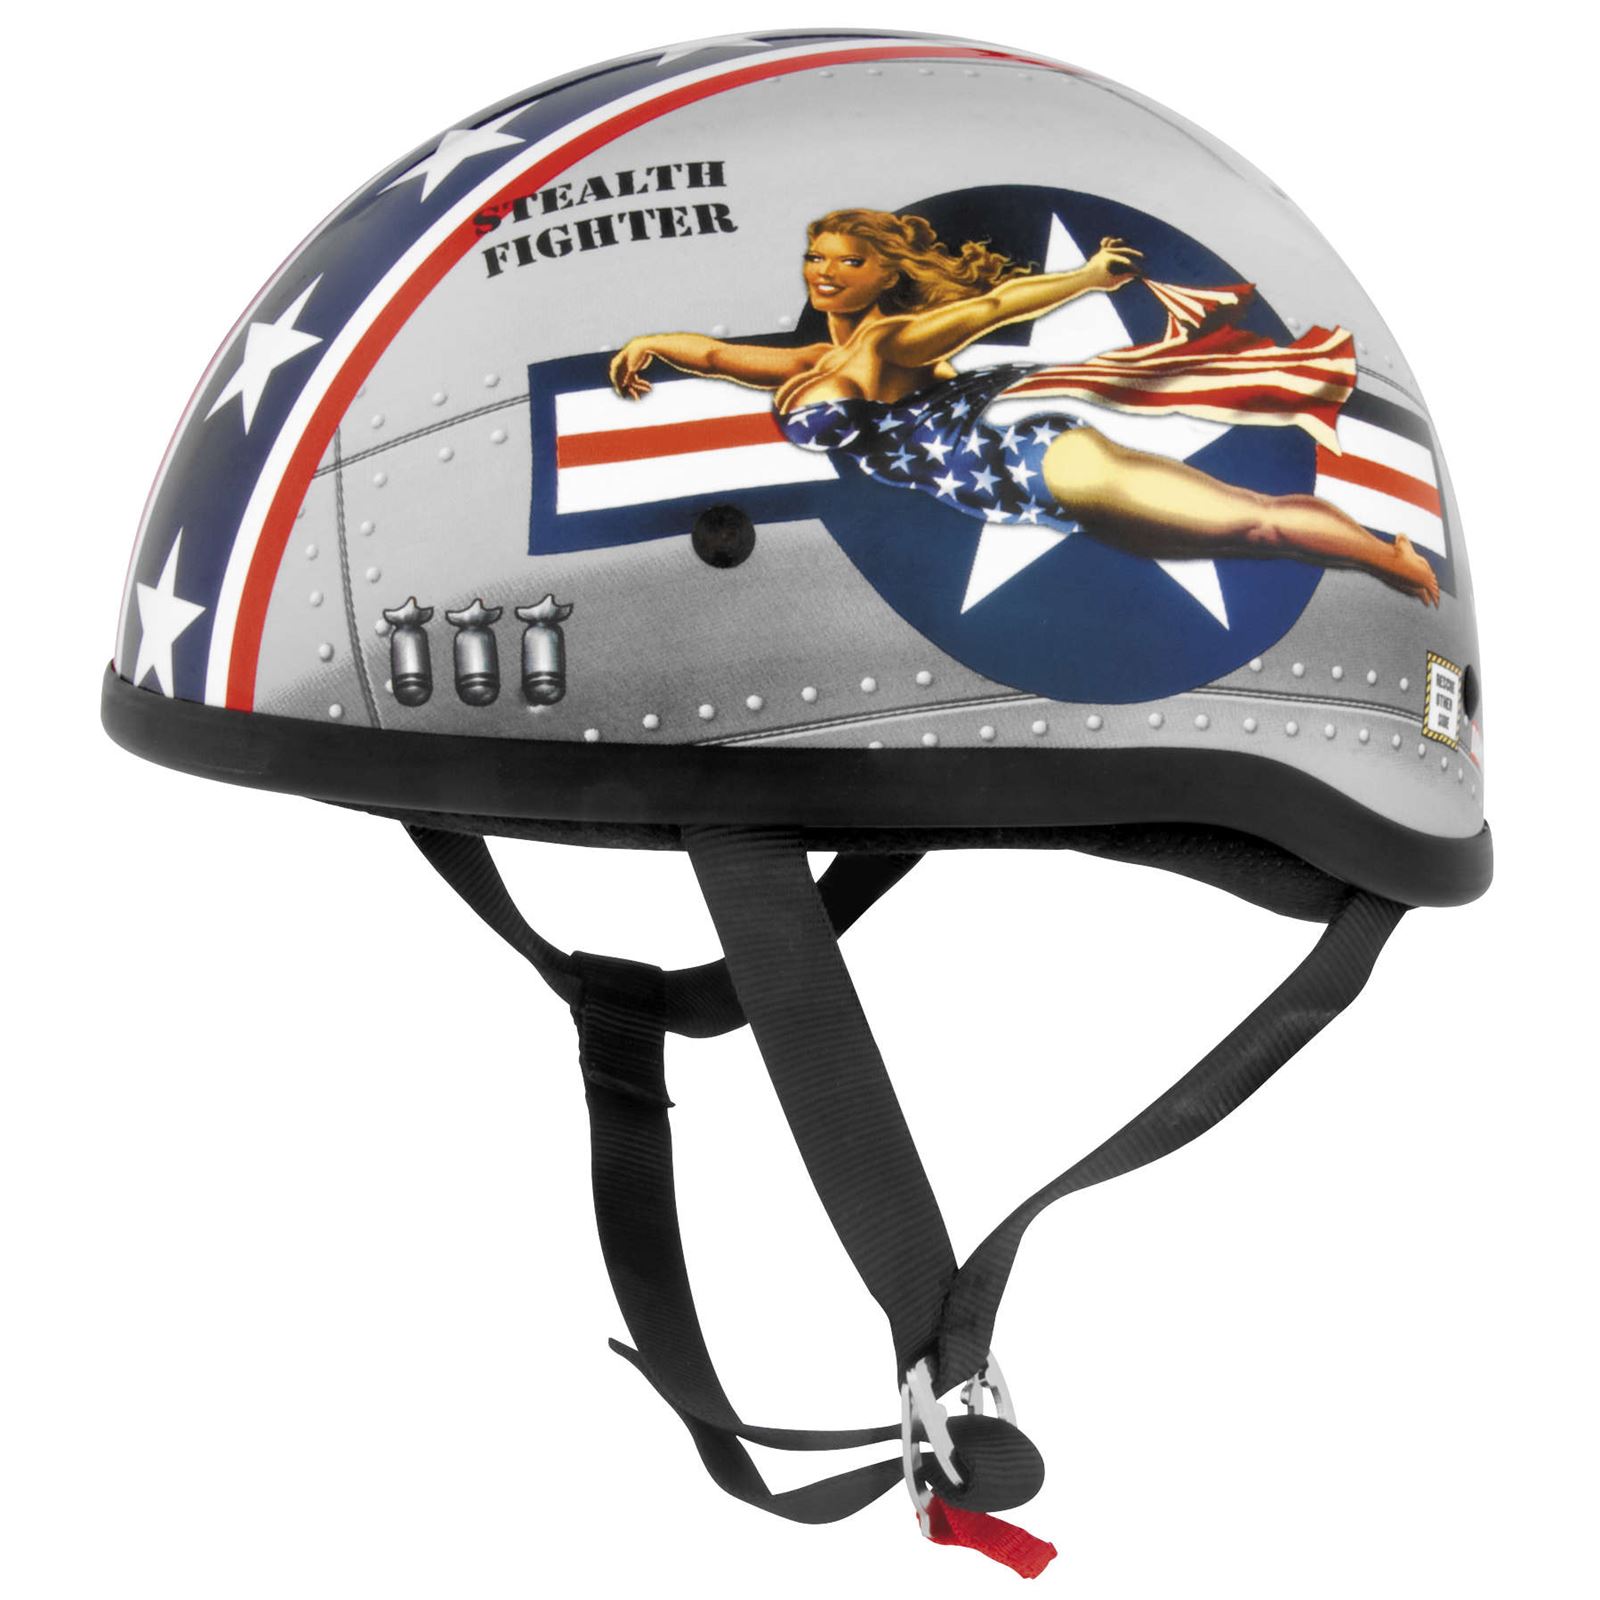 Skid Lid Helmets Original Lethal Threat Bomber Pinup Helmet - Silver/Blue - Medium